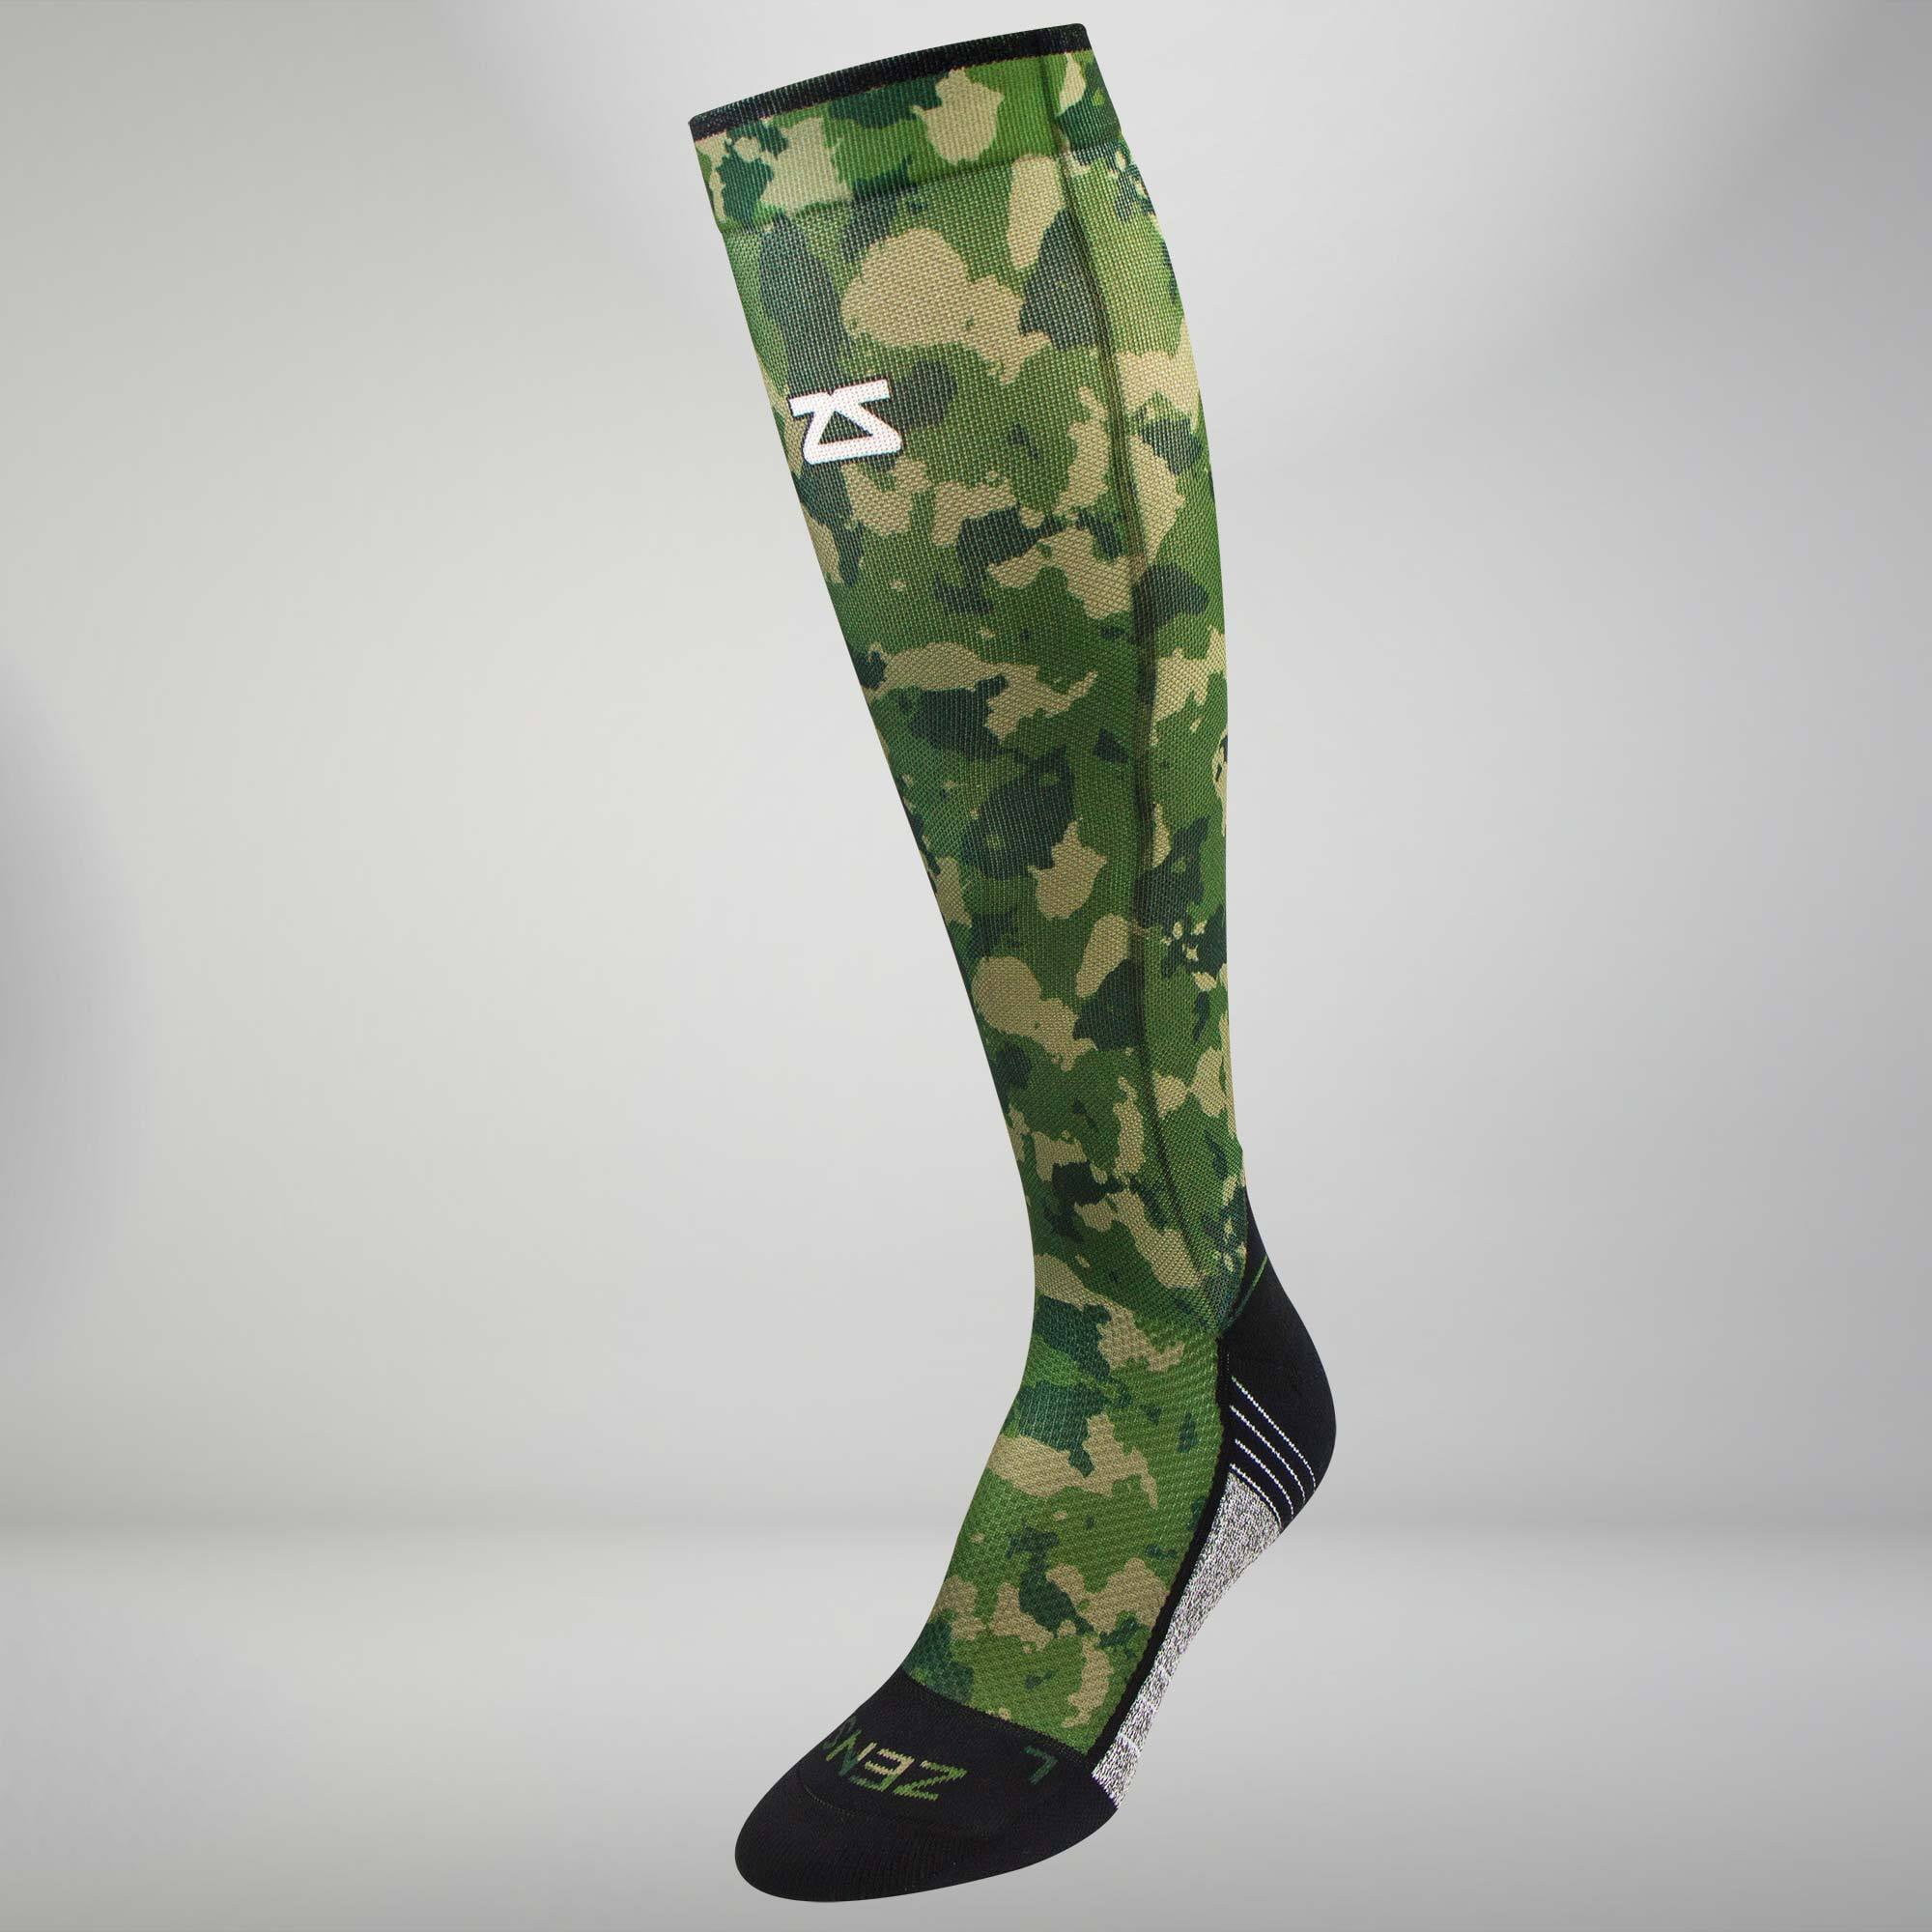 Dress Socks Green Camouflage Print High Knee Hose Hold-Up Stockings 